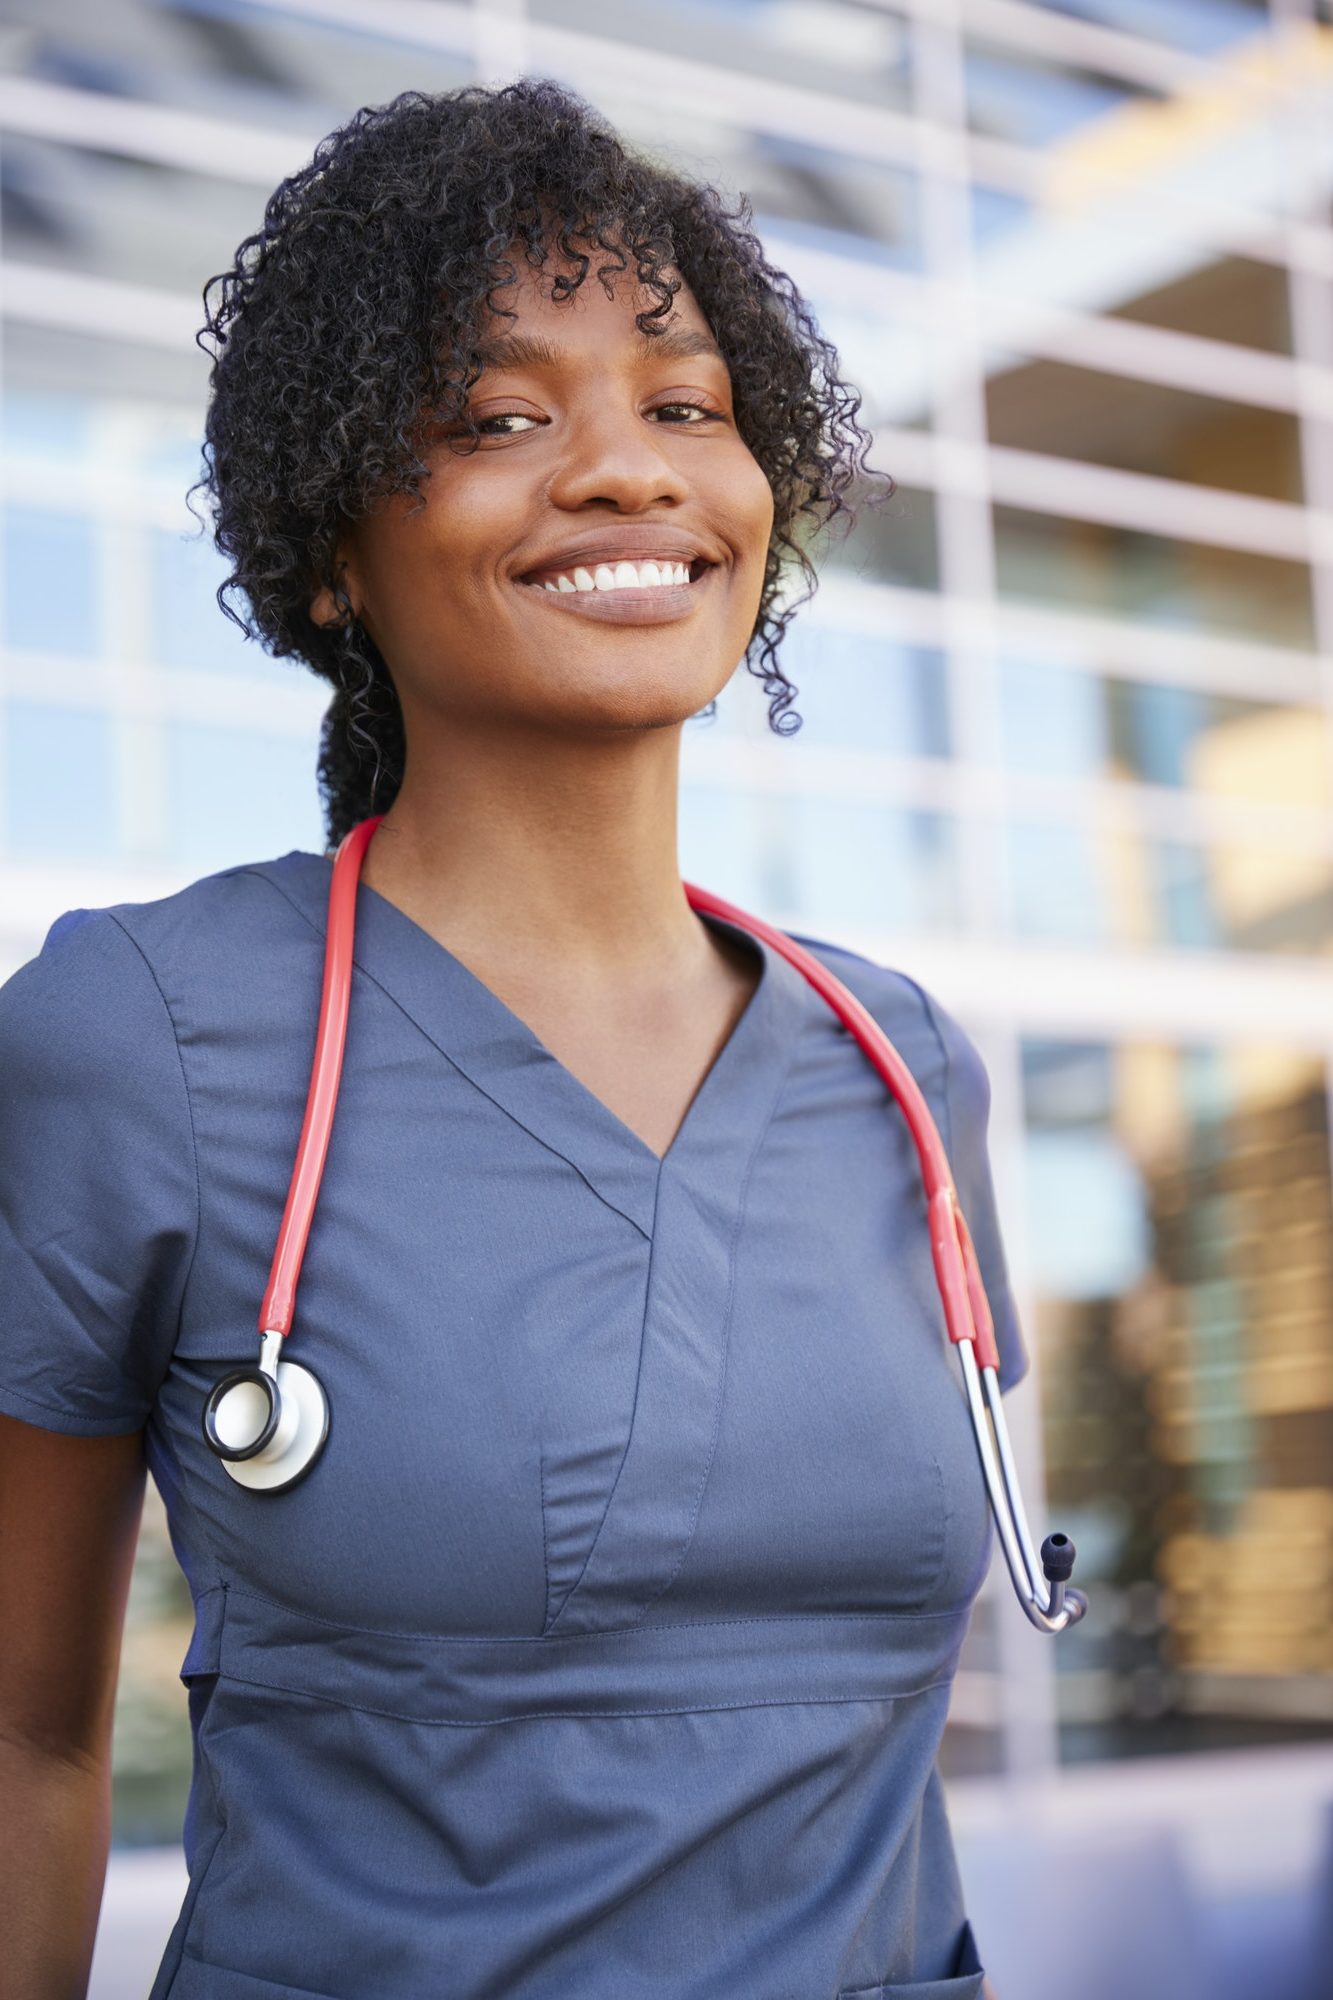 Smiling black female healthcare worker outdoors, vertical